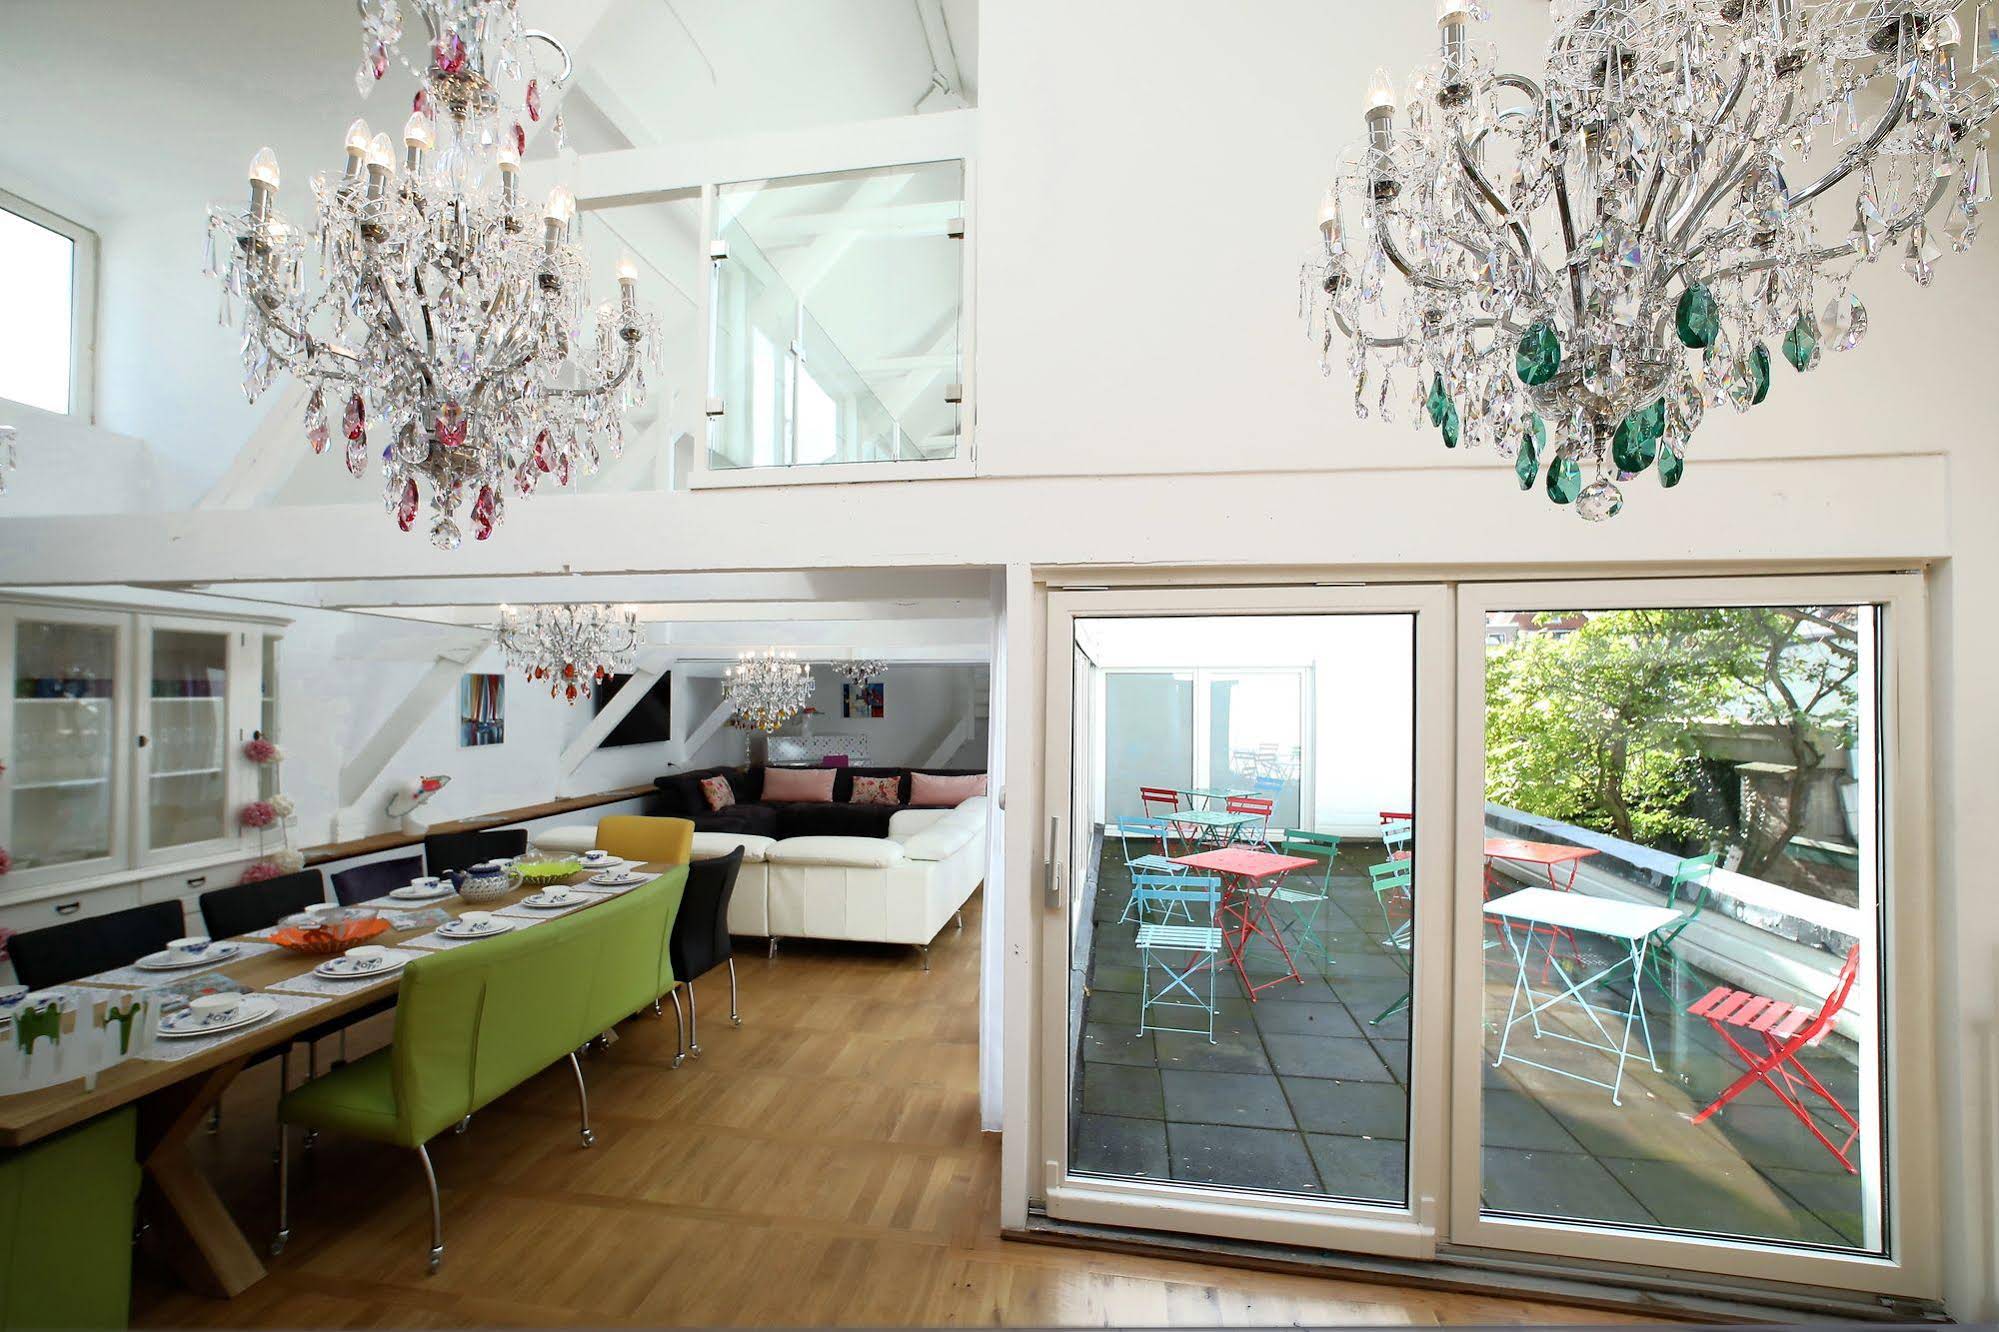 Luxury Apartments Delft Family Houses